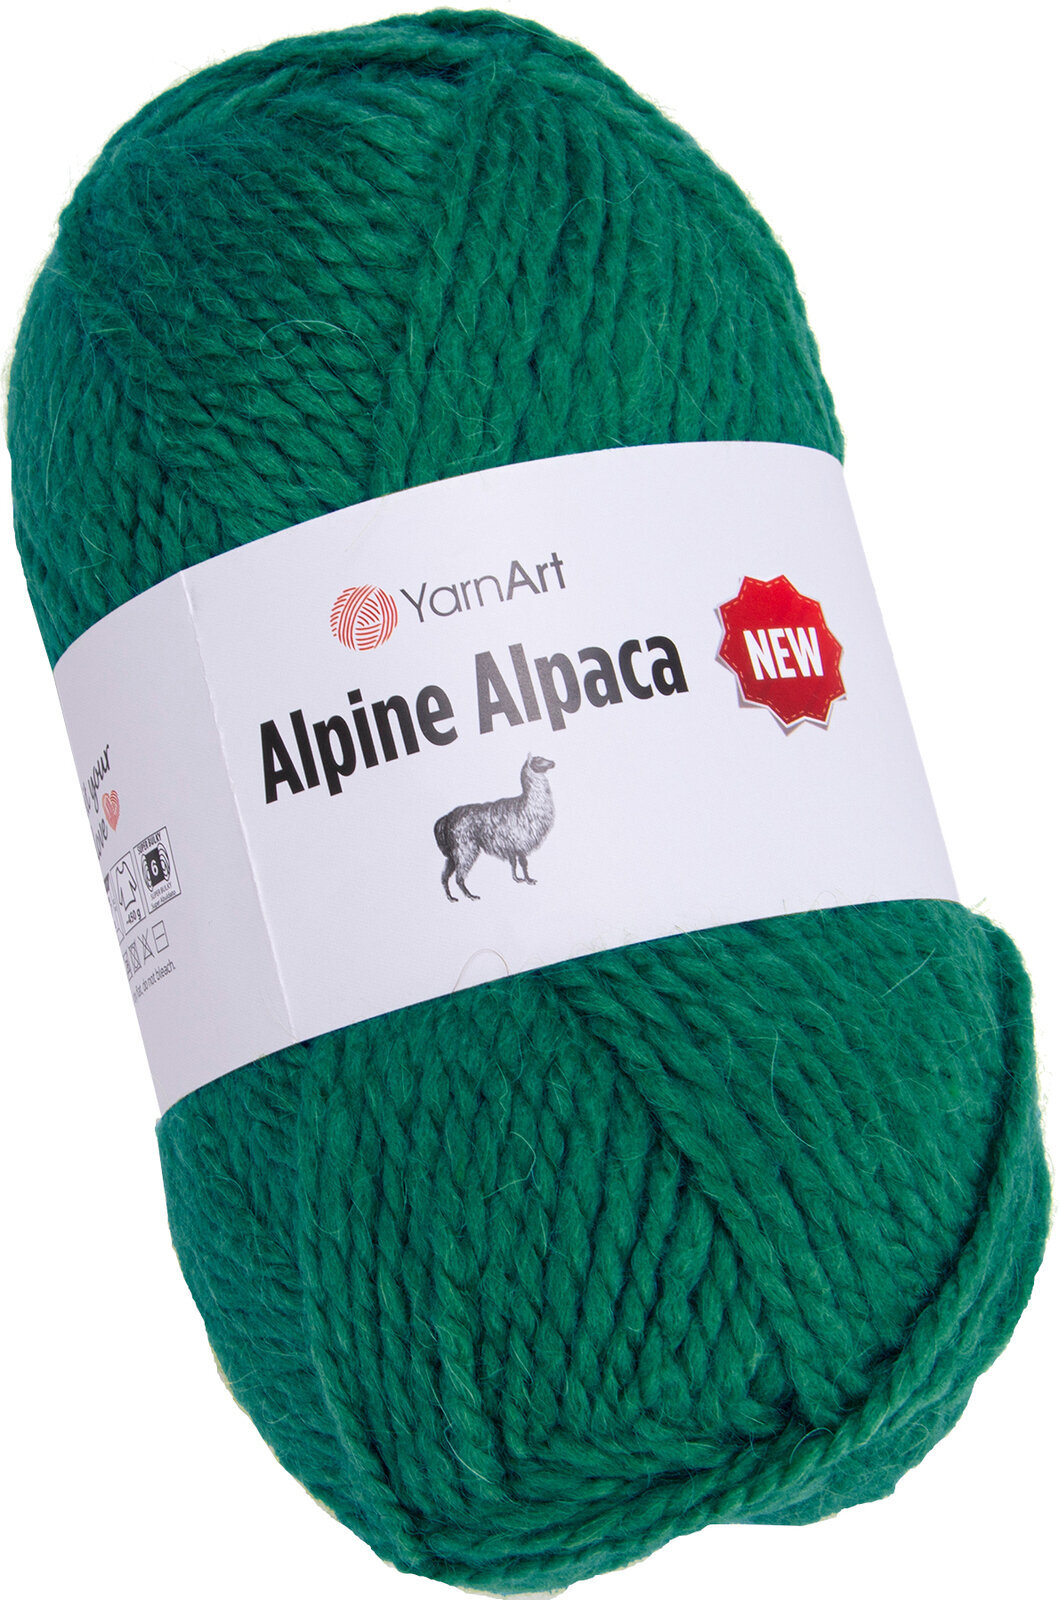 Knitting Yarn Yarn Art Alpine Alpaca New 1449